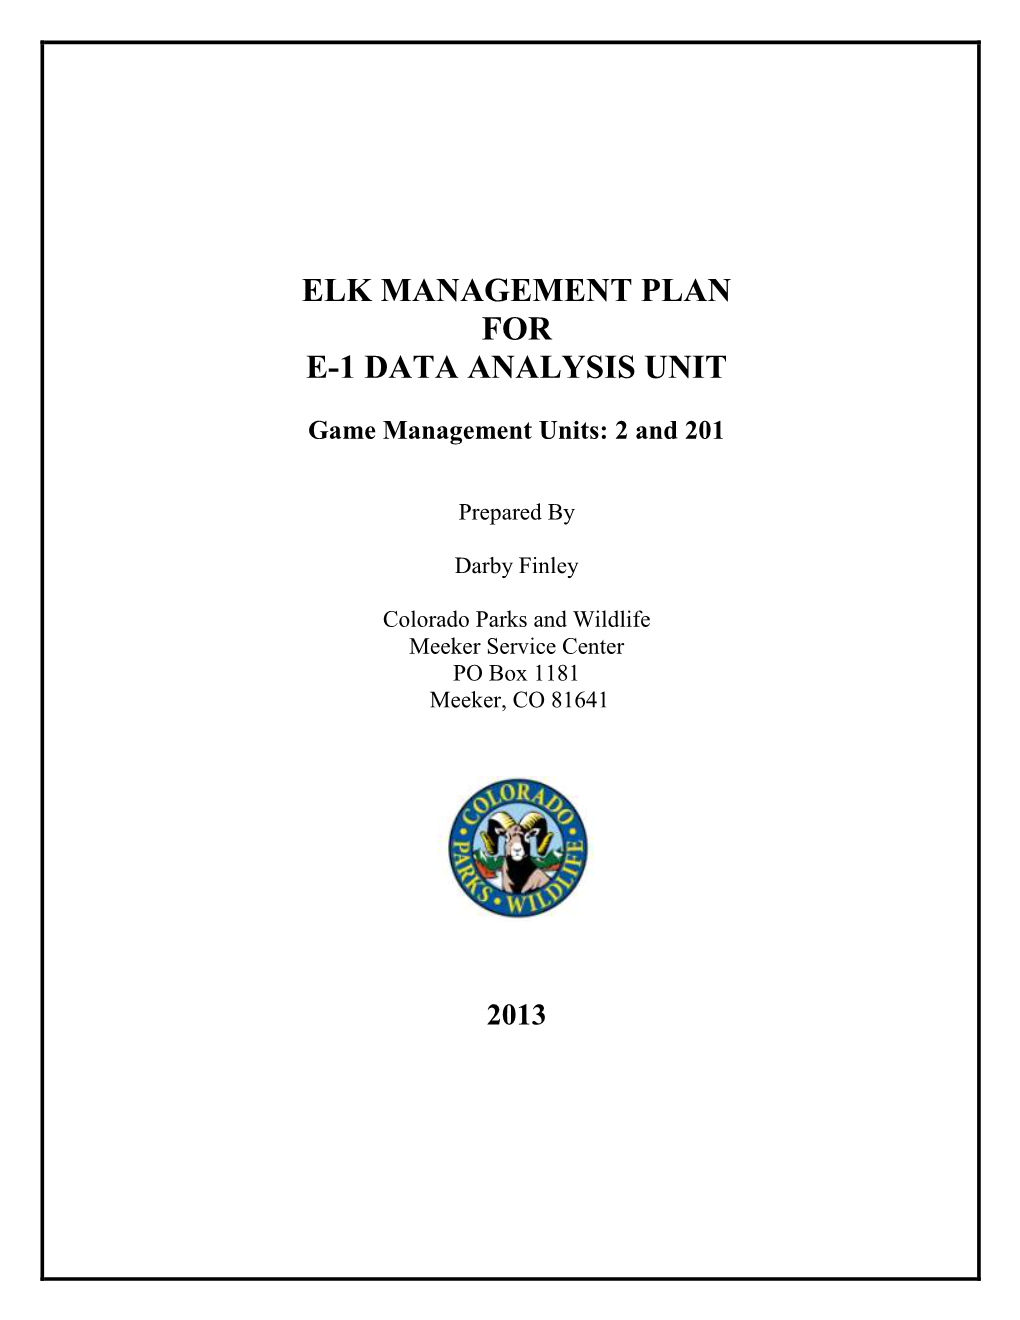 Elk Management Plan for E-1 Data Analysis Unit